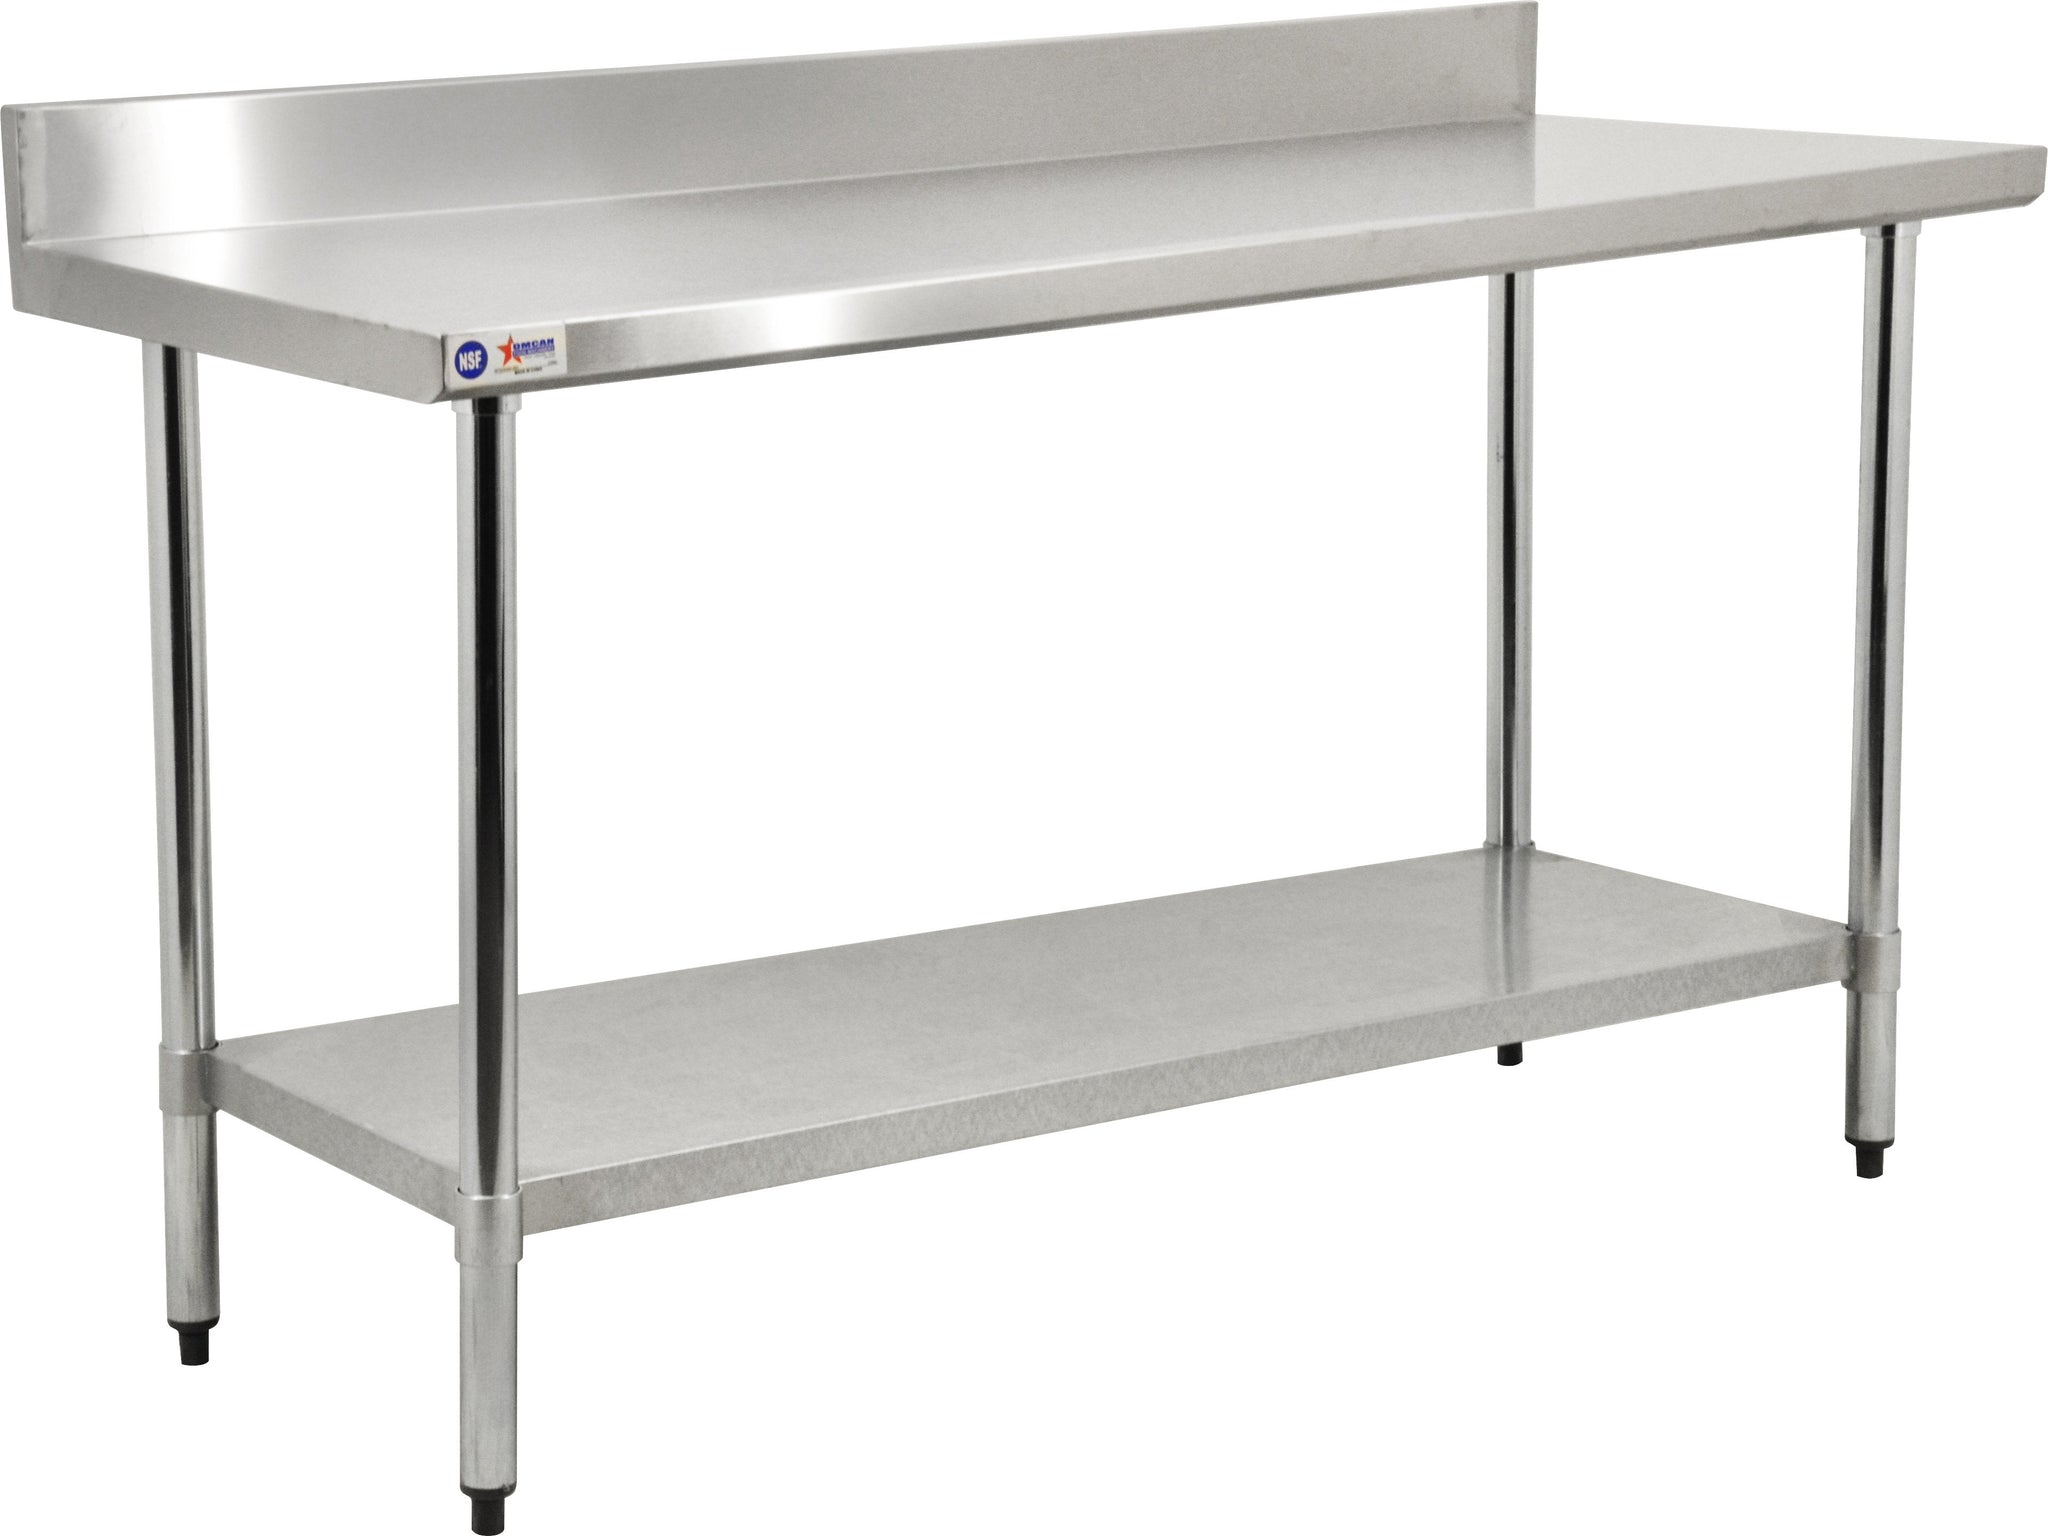 Omcan - 30” x 30" Elite Stainless Steel Work Table with 4" Backsplash - 23801